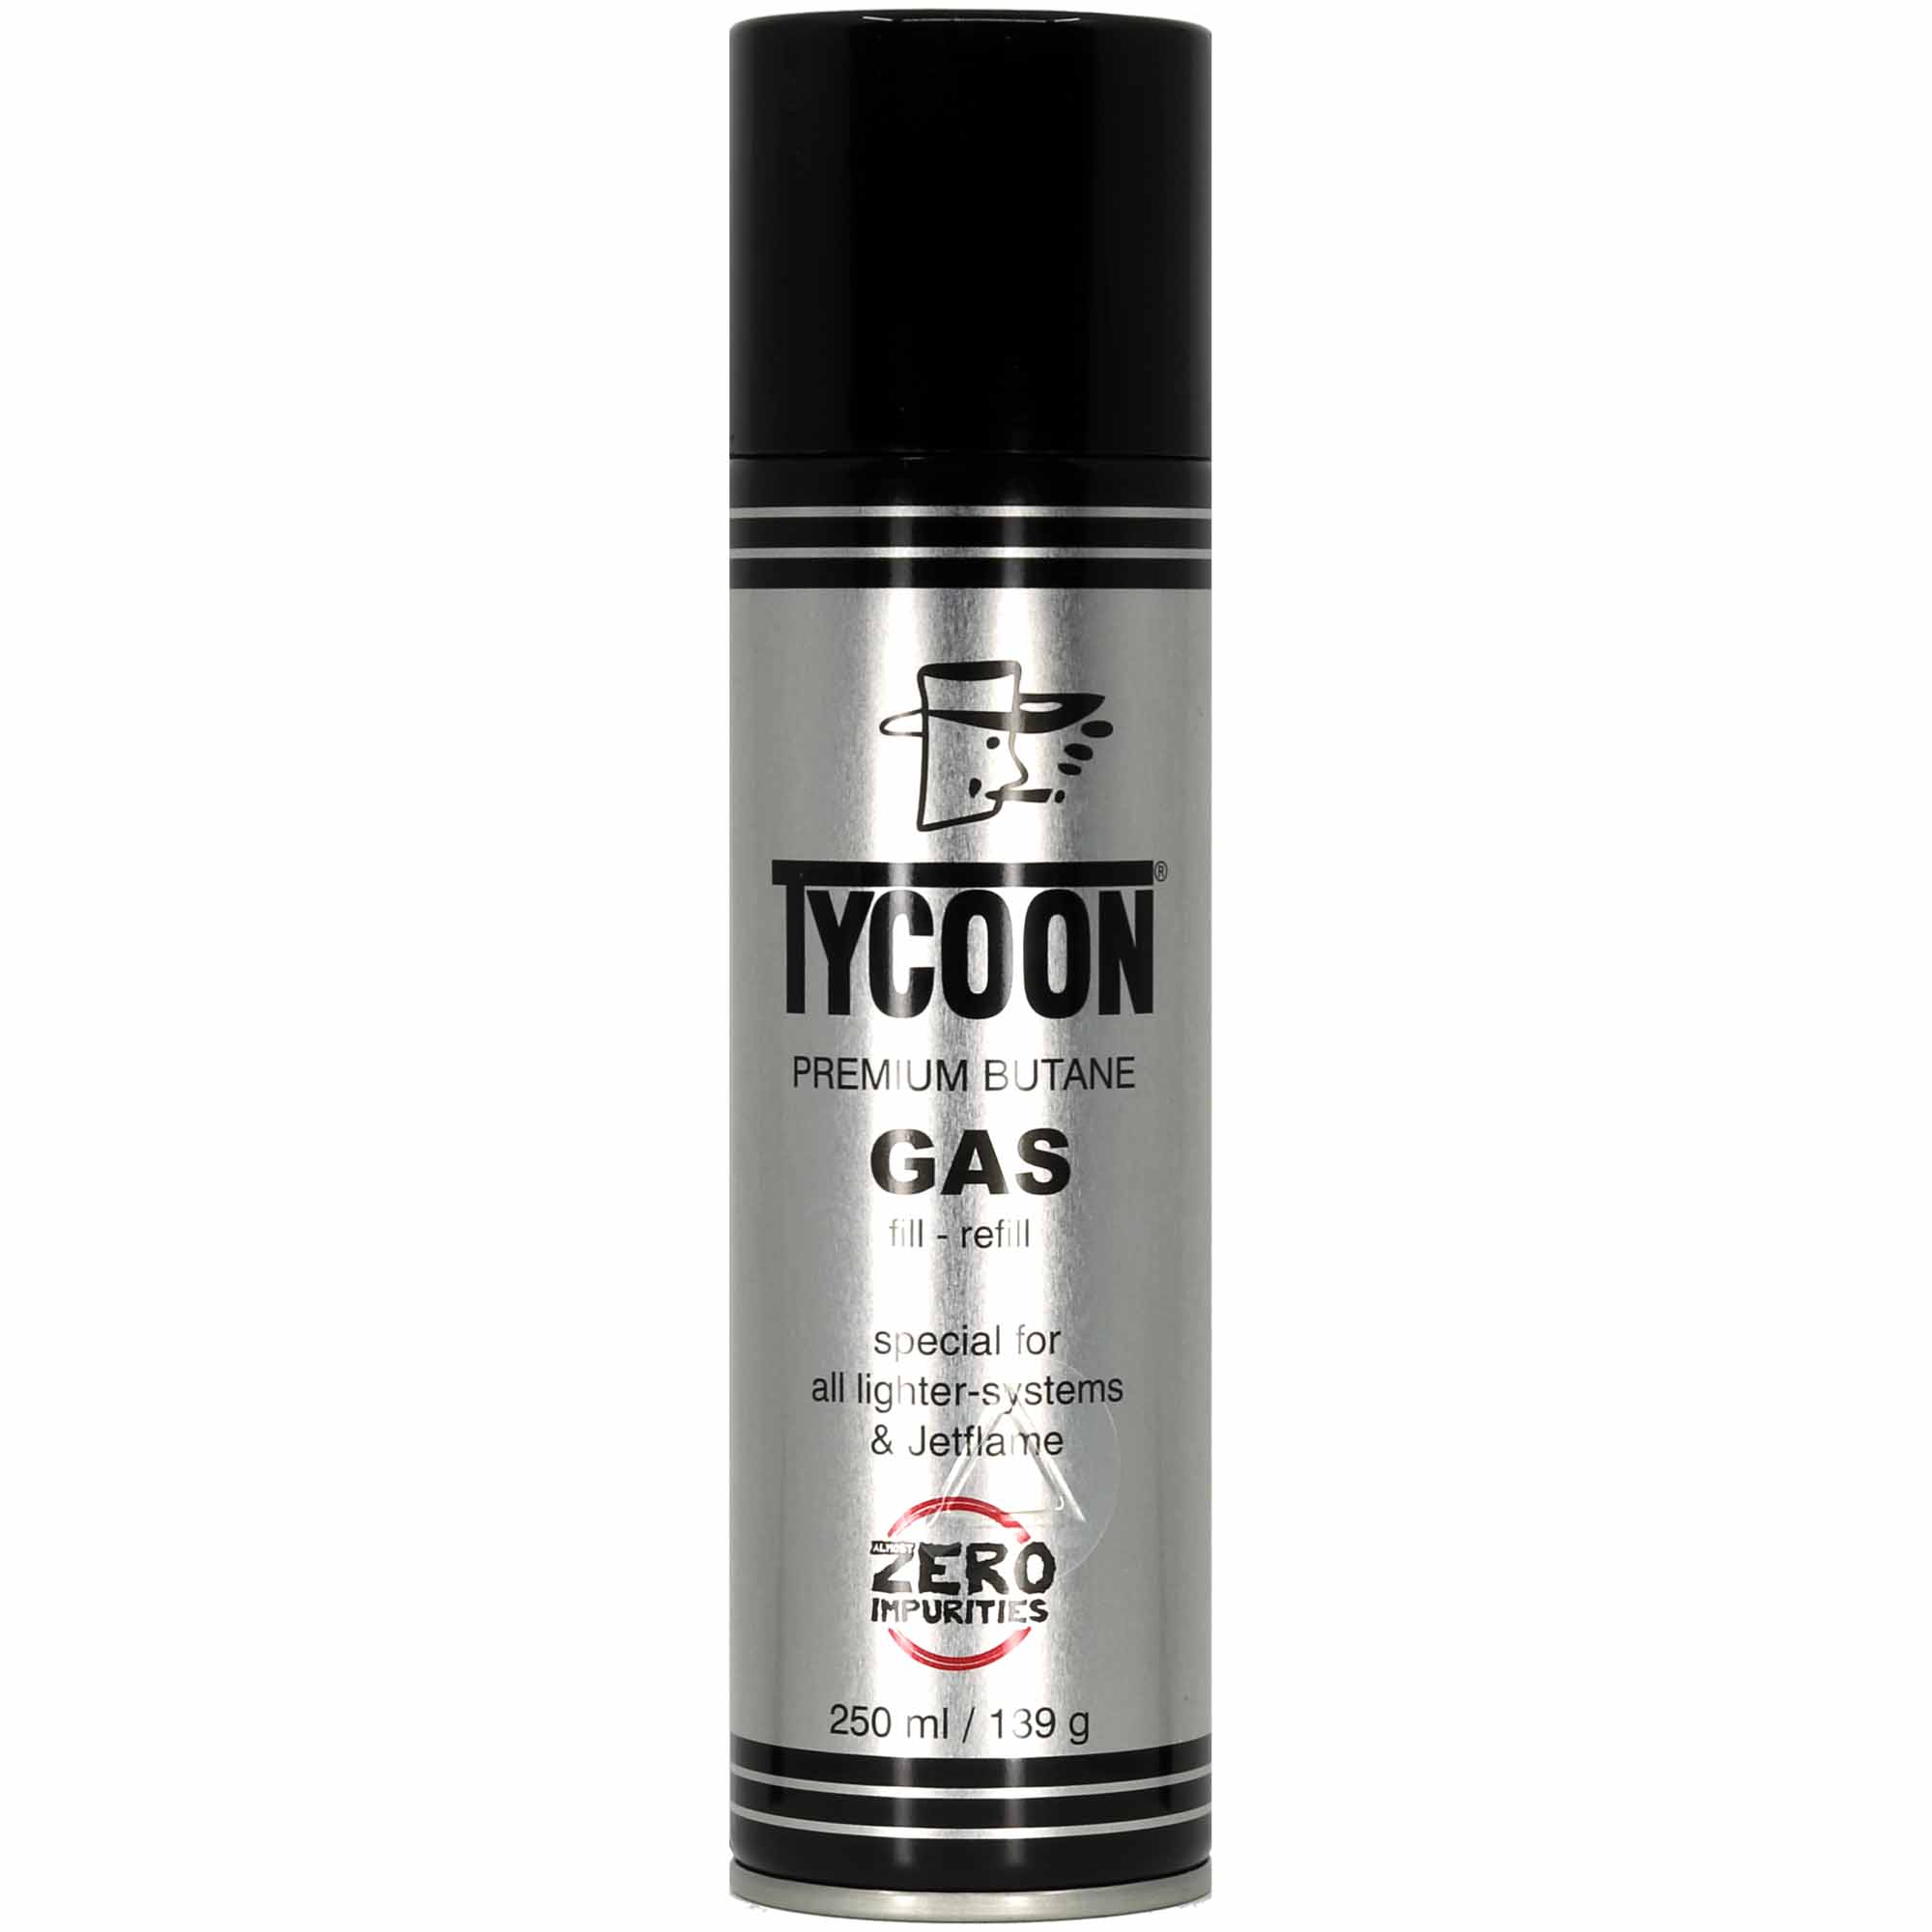 Tycoon Butan Gas